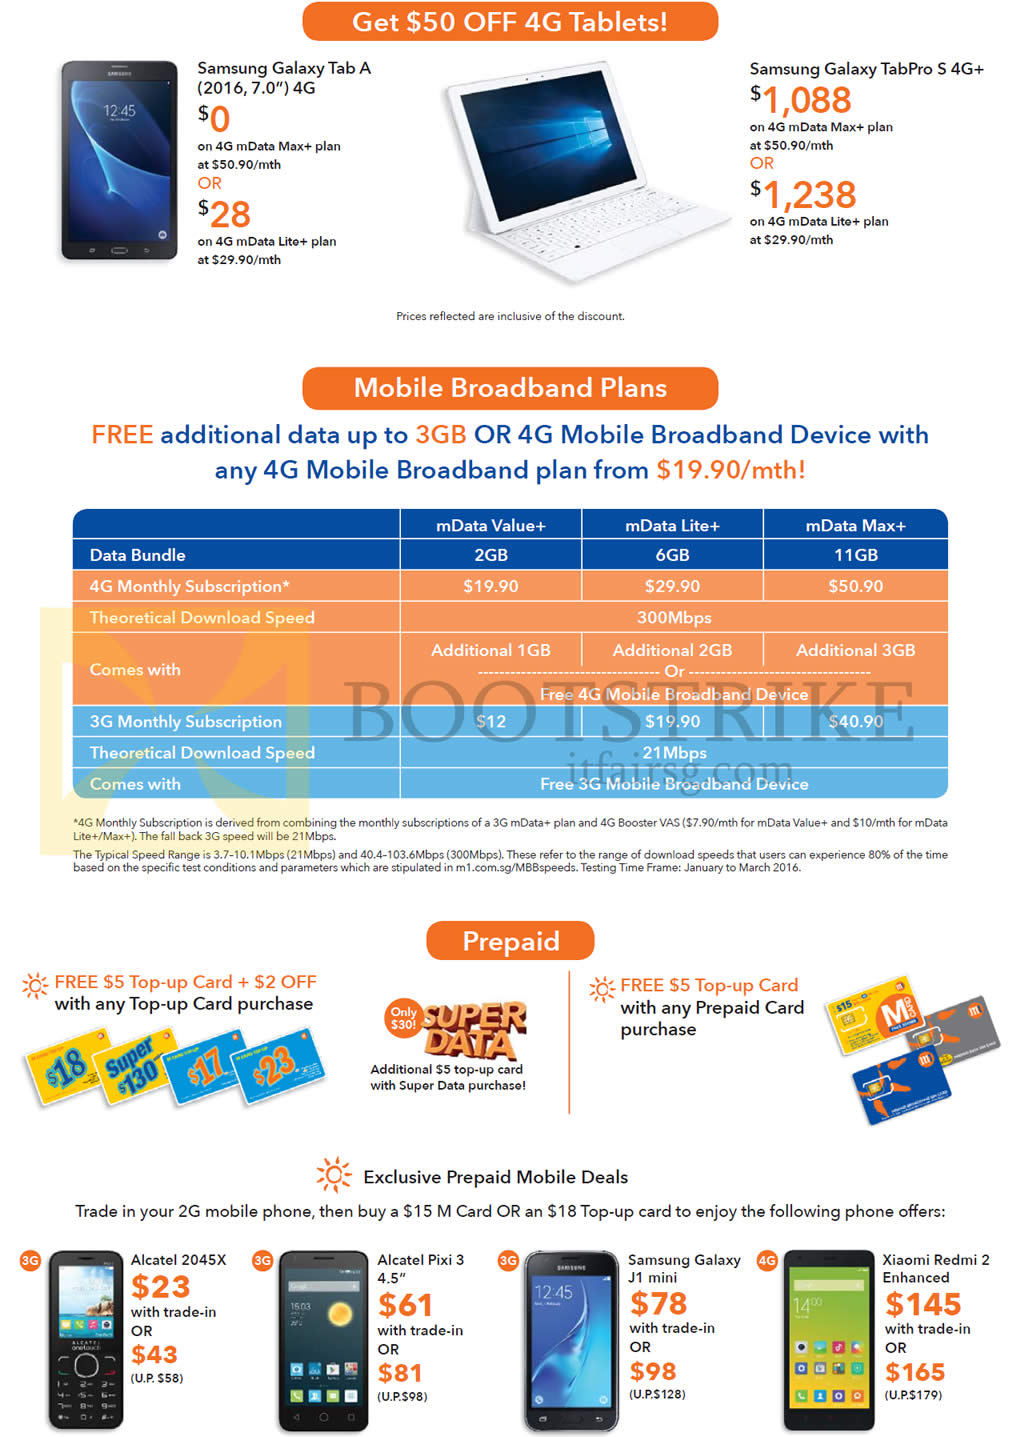 PC SHOW 2016 price list image brochure of M1 Tablets, Mobile Broadband Plans, Prepaid, Samsung Galaxy Tab A, TabPro S 4G Plus, MData Value Plus, Lite Plus, Max Plus, Free Top Up Card, Alcatel 2045X, Pixi 3